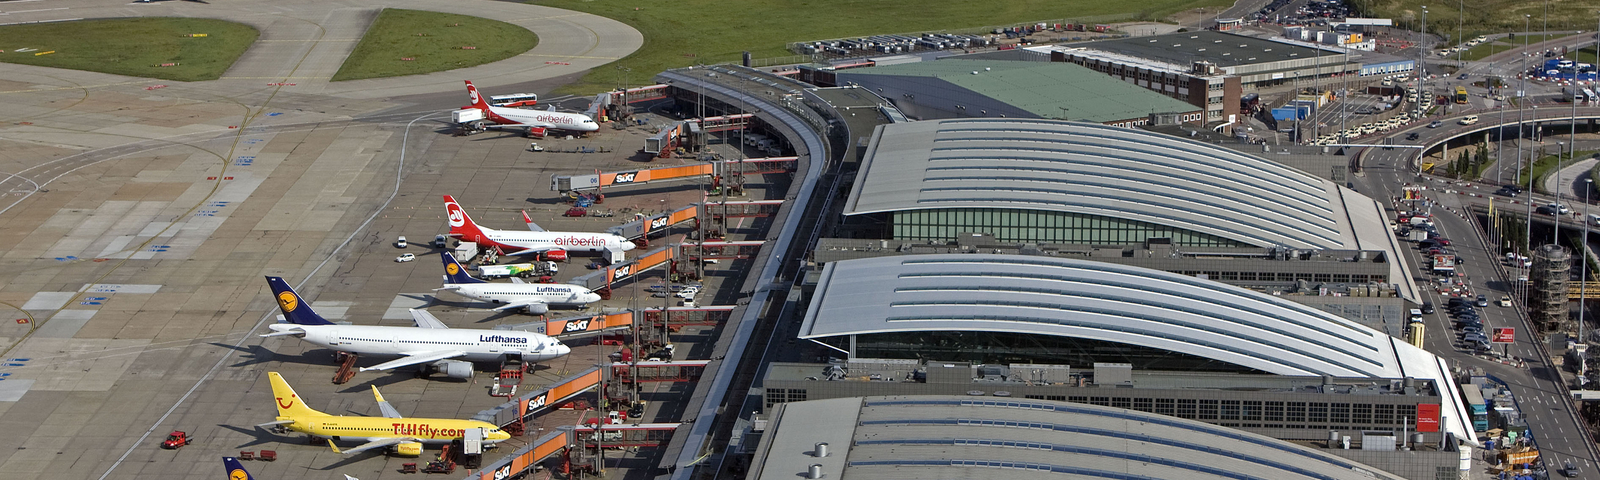 Reference - Flughafen Hamburg- Airport Plaza